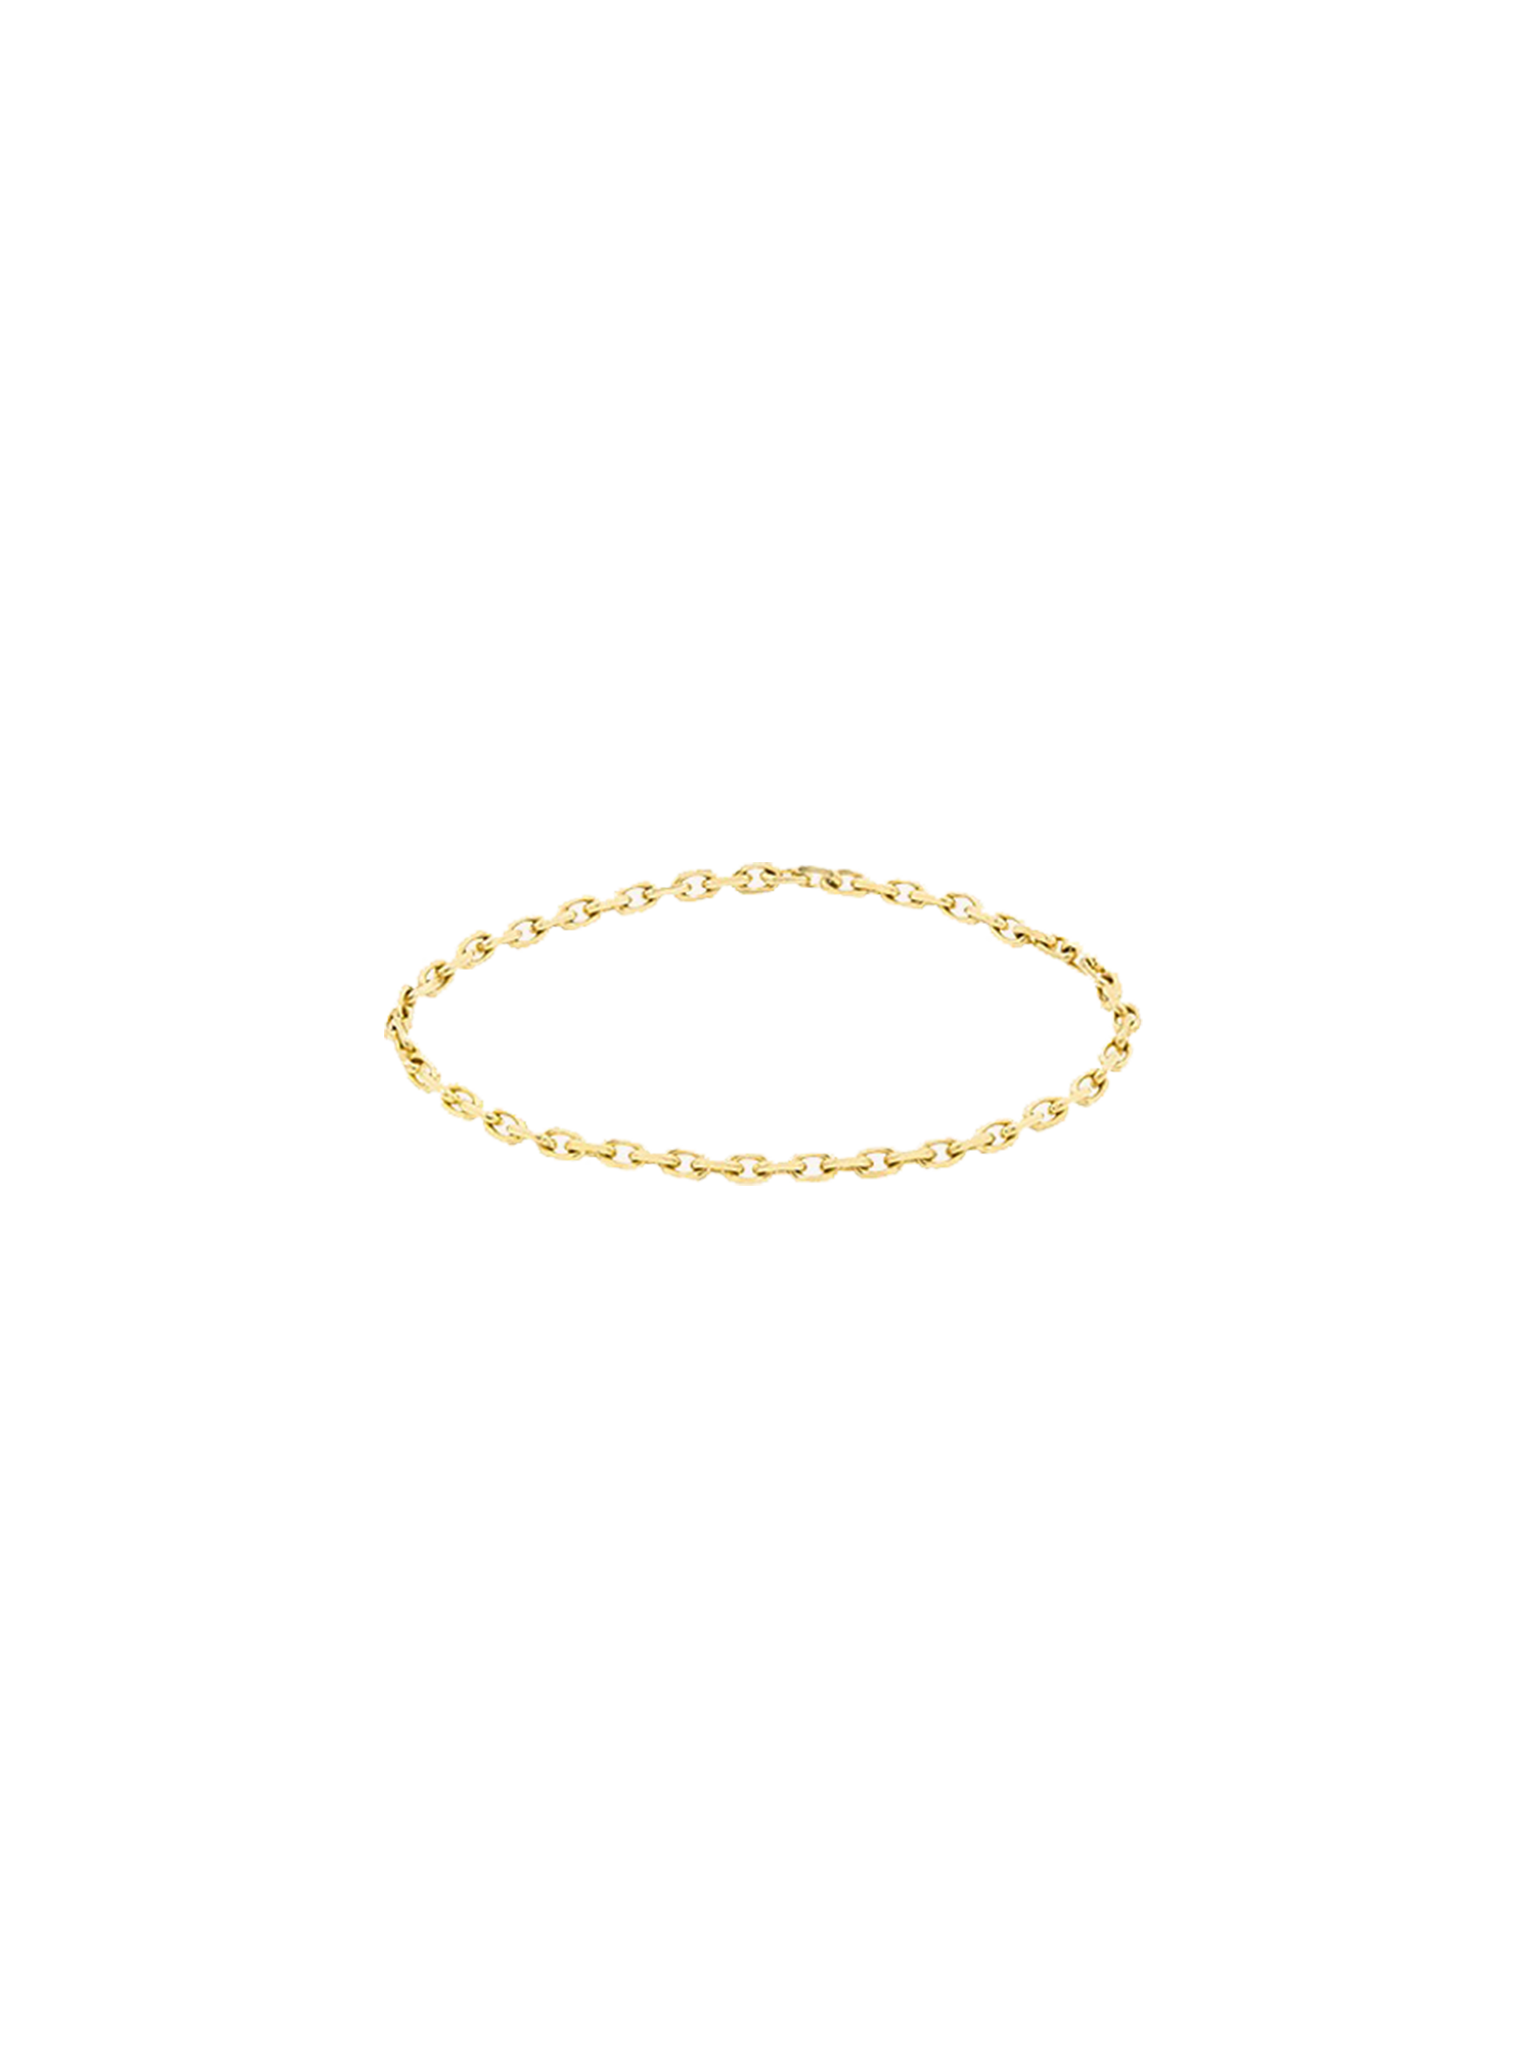 Alba chain ring